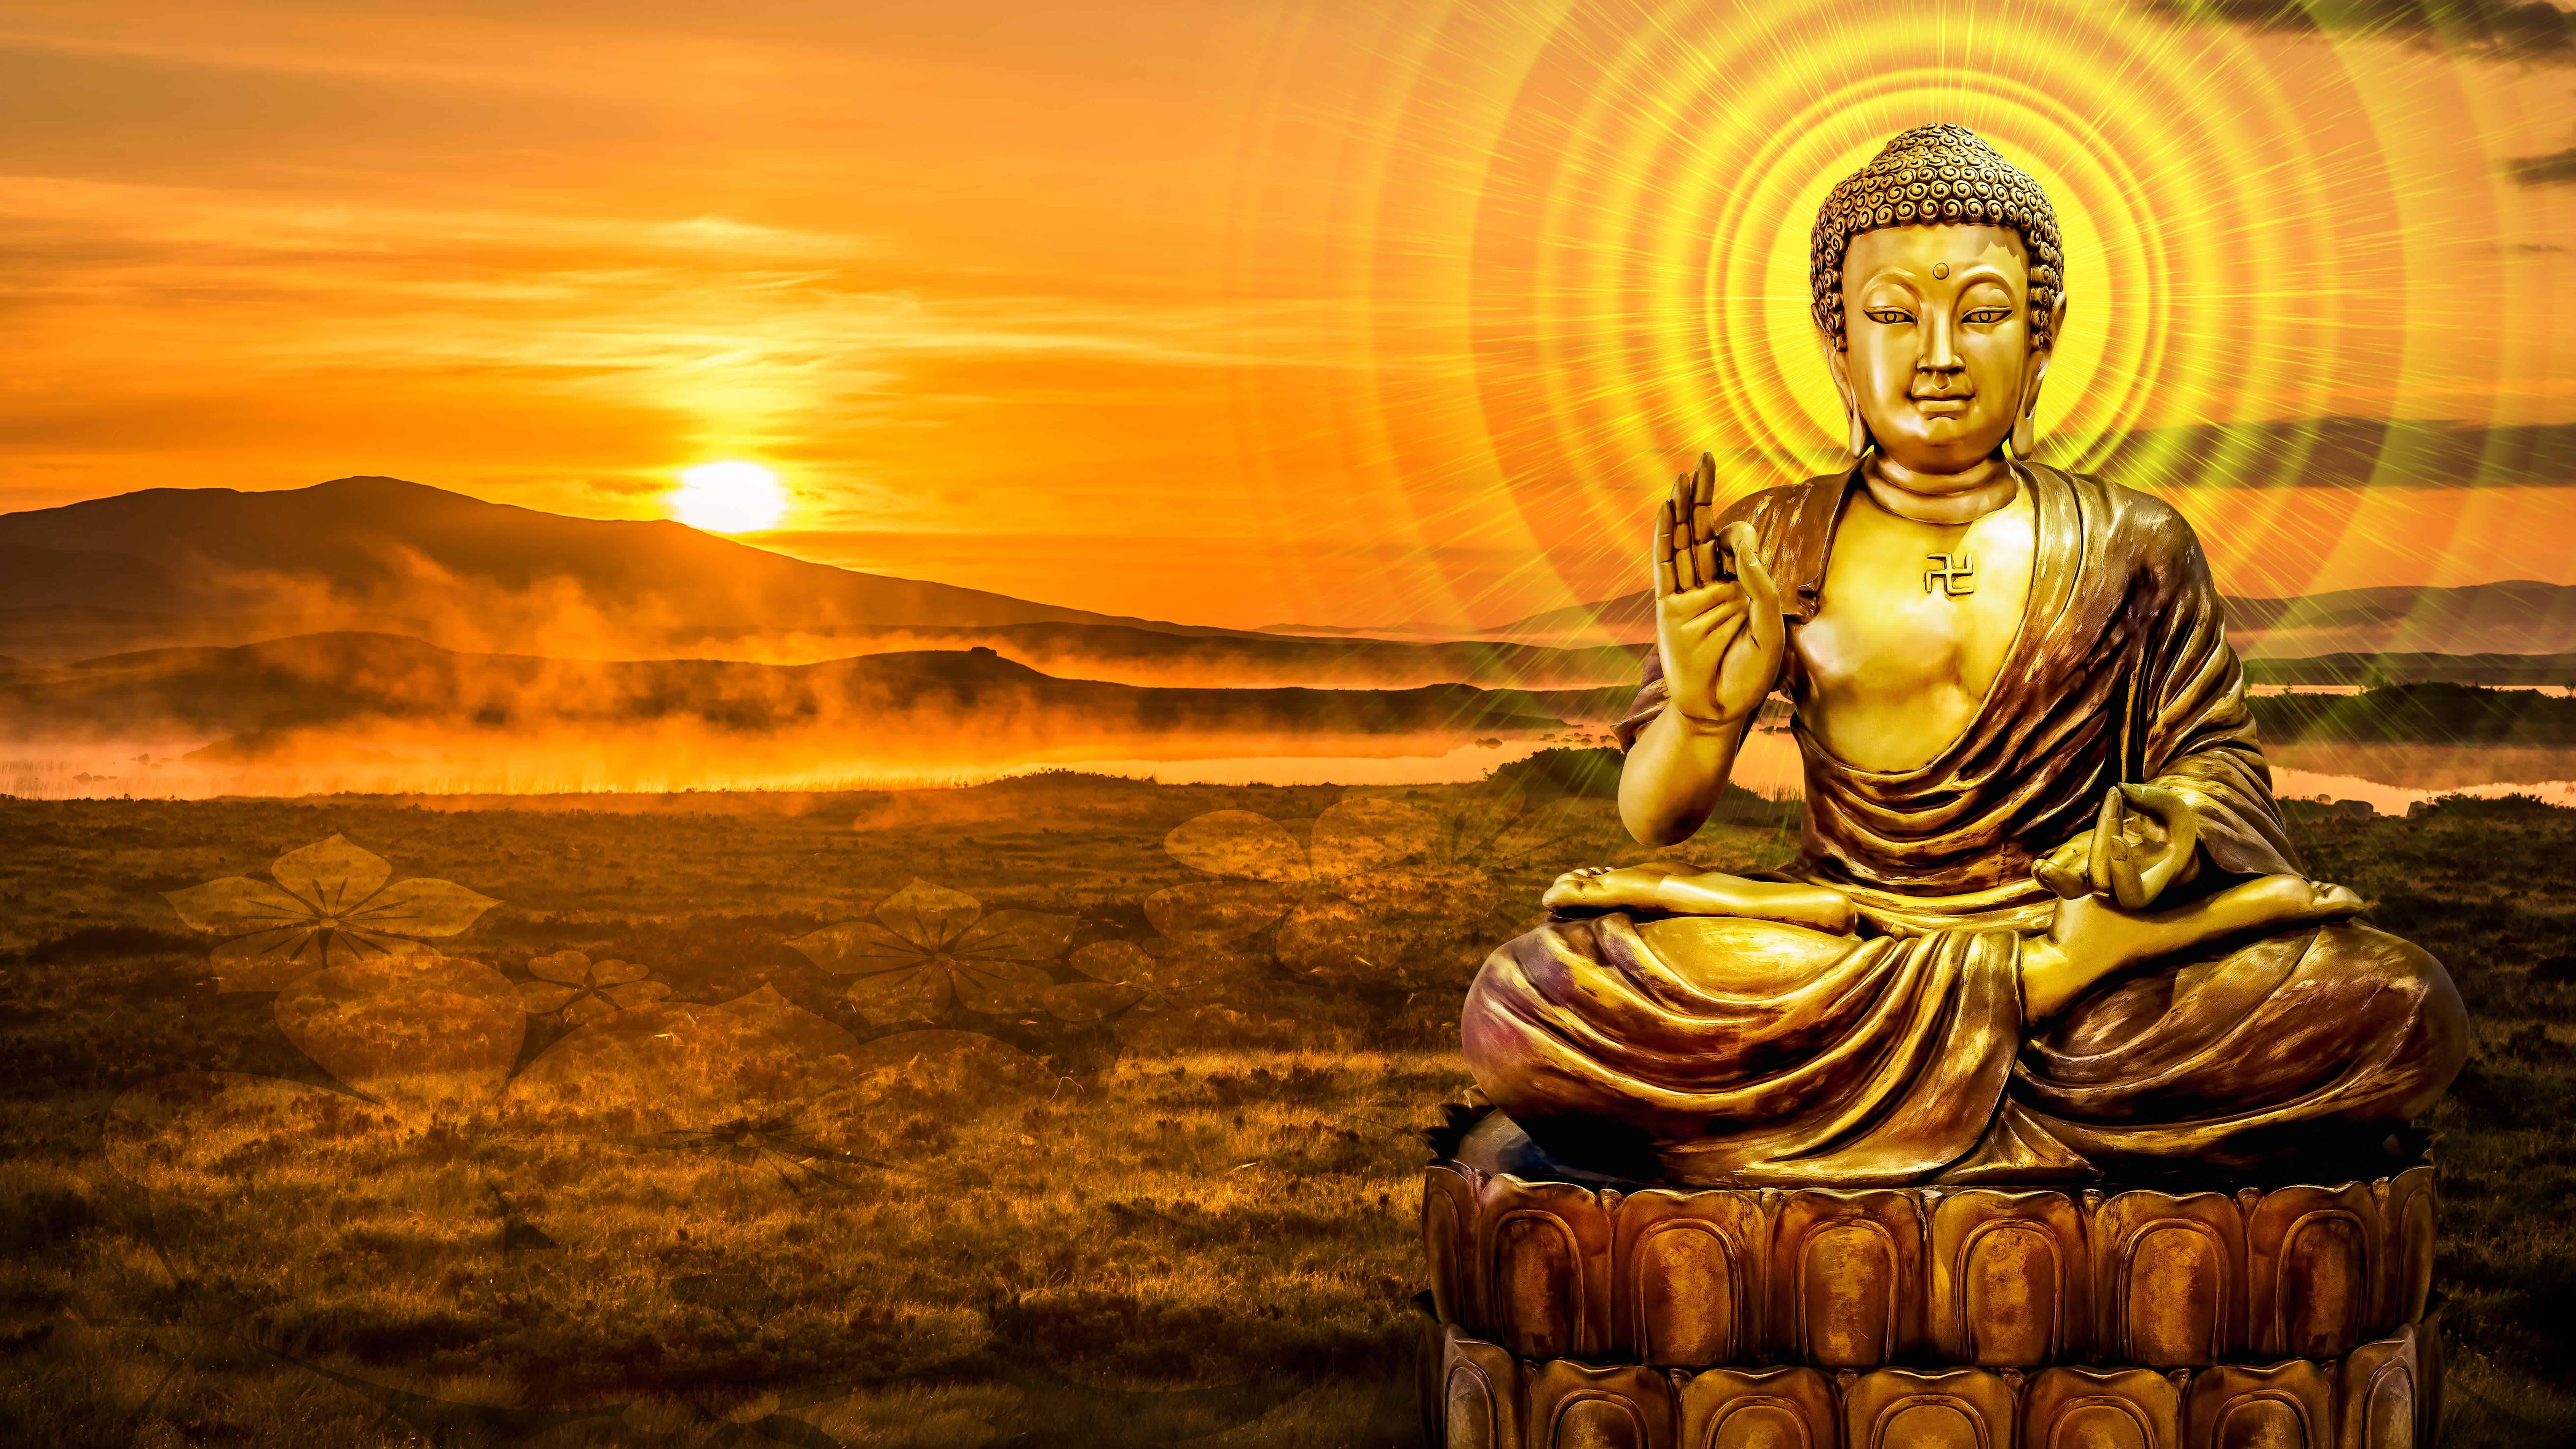 Божественный мудрец 4 буквы. Сиддхартха Гаутама Будда. Будда Сиддхартха Гаутама Шакьямуни. Сиддхартха Гаутама Будда статуя. Бодхисаттва Будда Шакьямуни Гаутама.